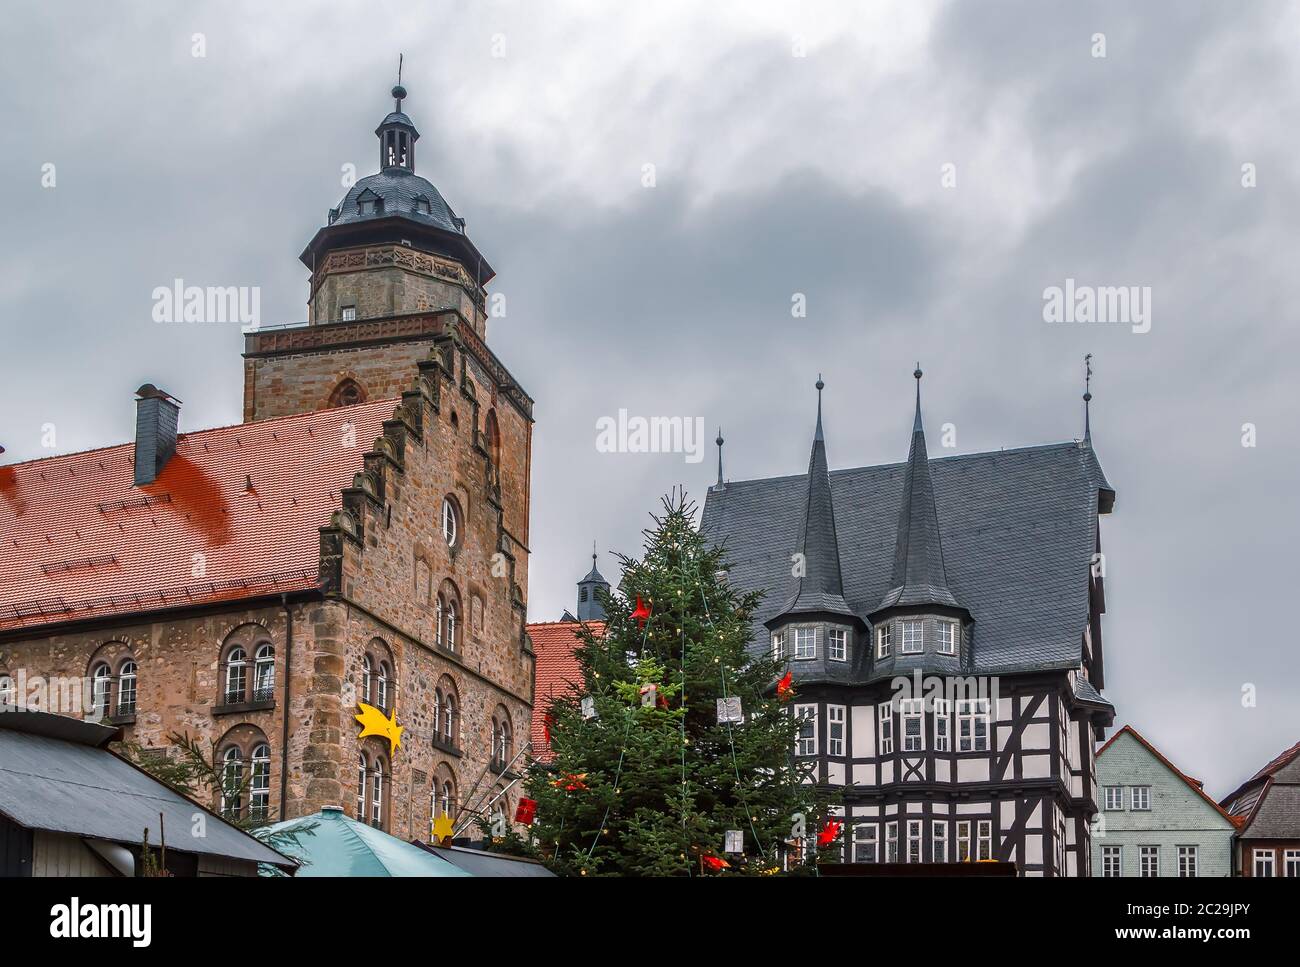 Alsfeld in christmastime, Germany Stock Photo